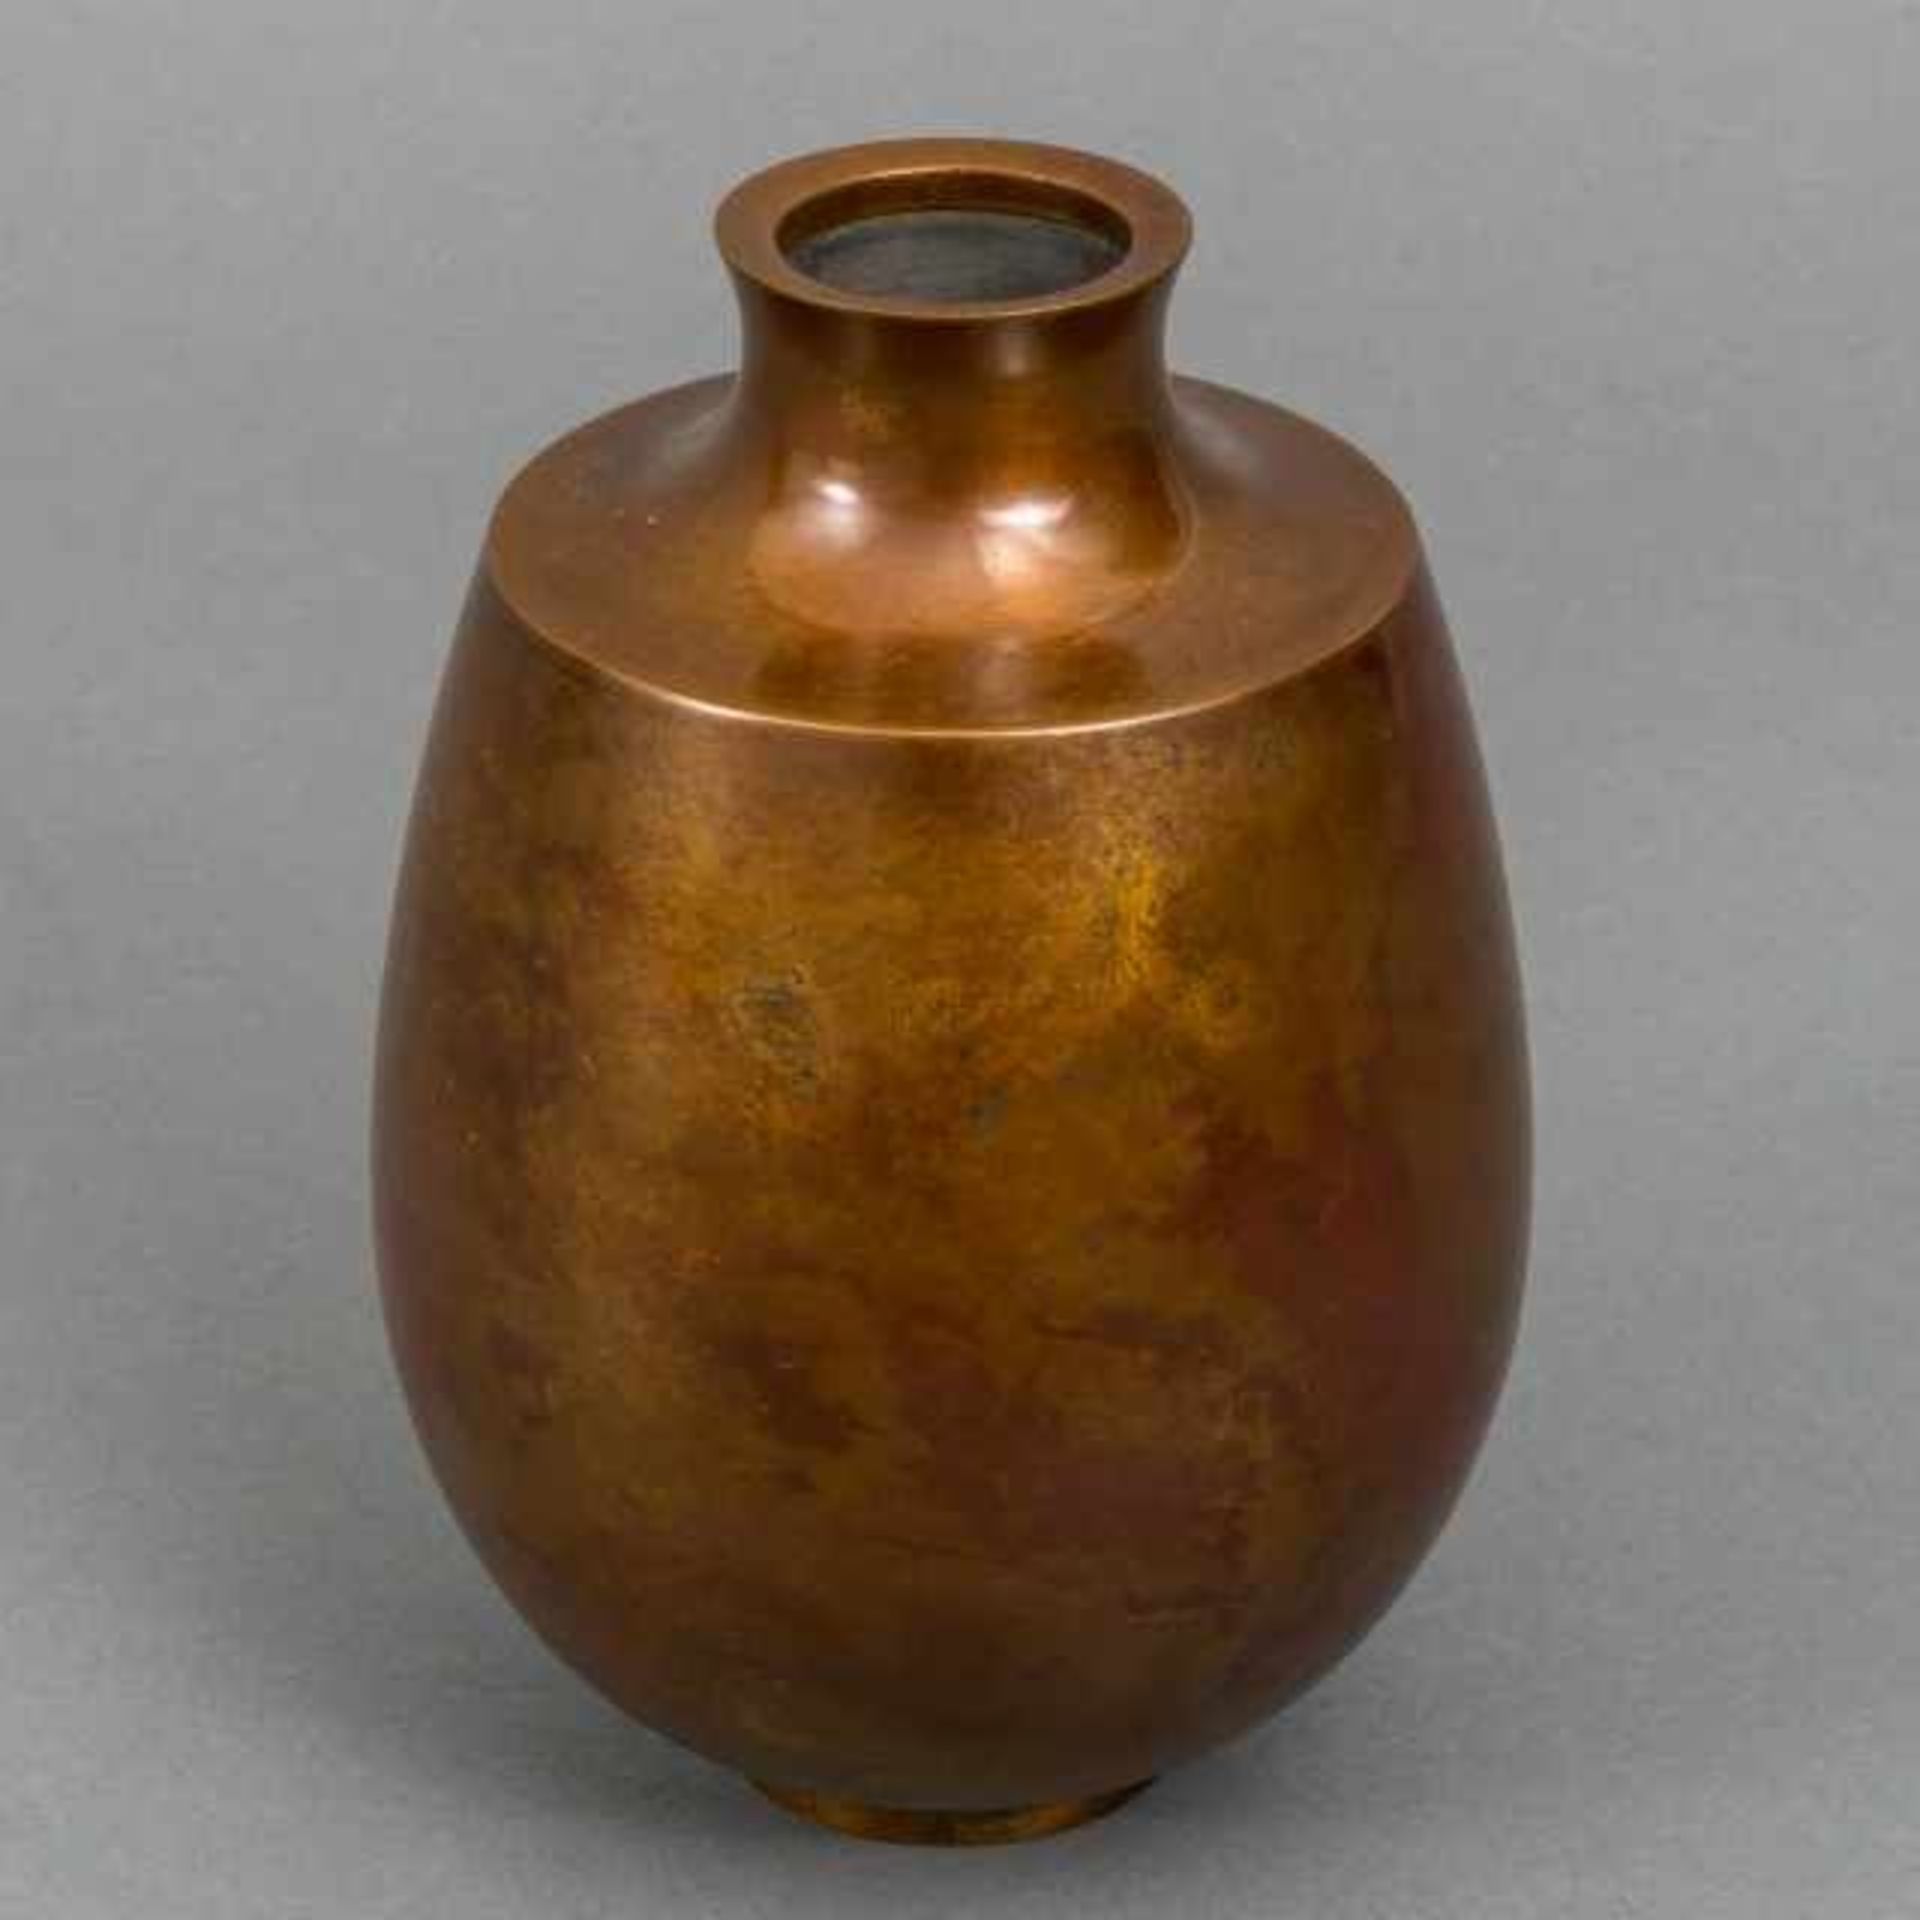 Kurisaki Tsugio (1945/1946), brown patinated bronze vase with broad sharp-edged shoulder and red